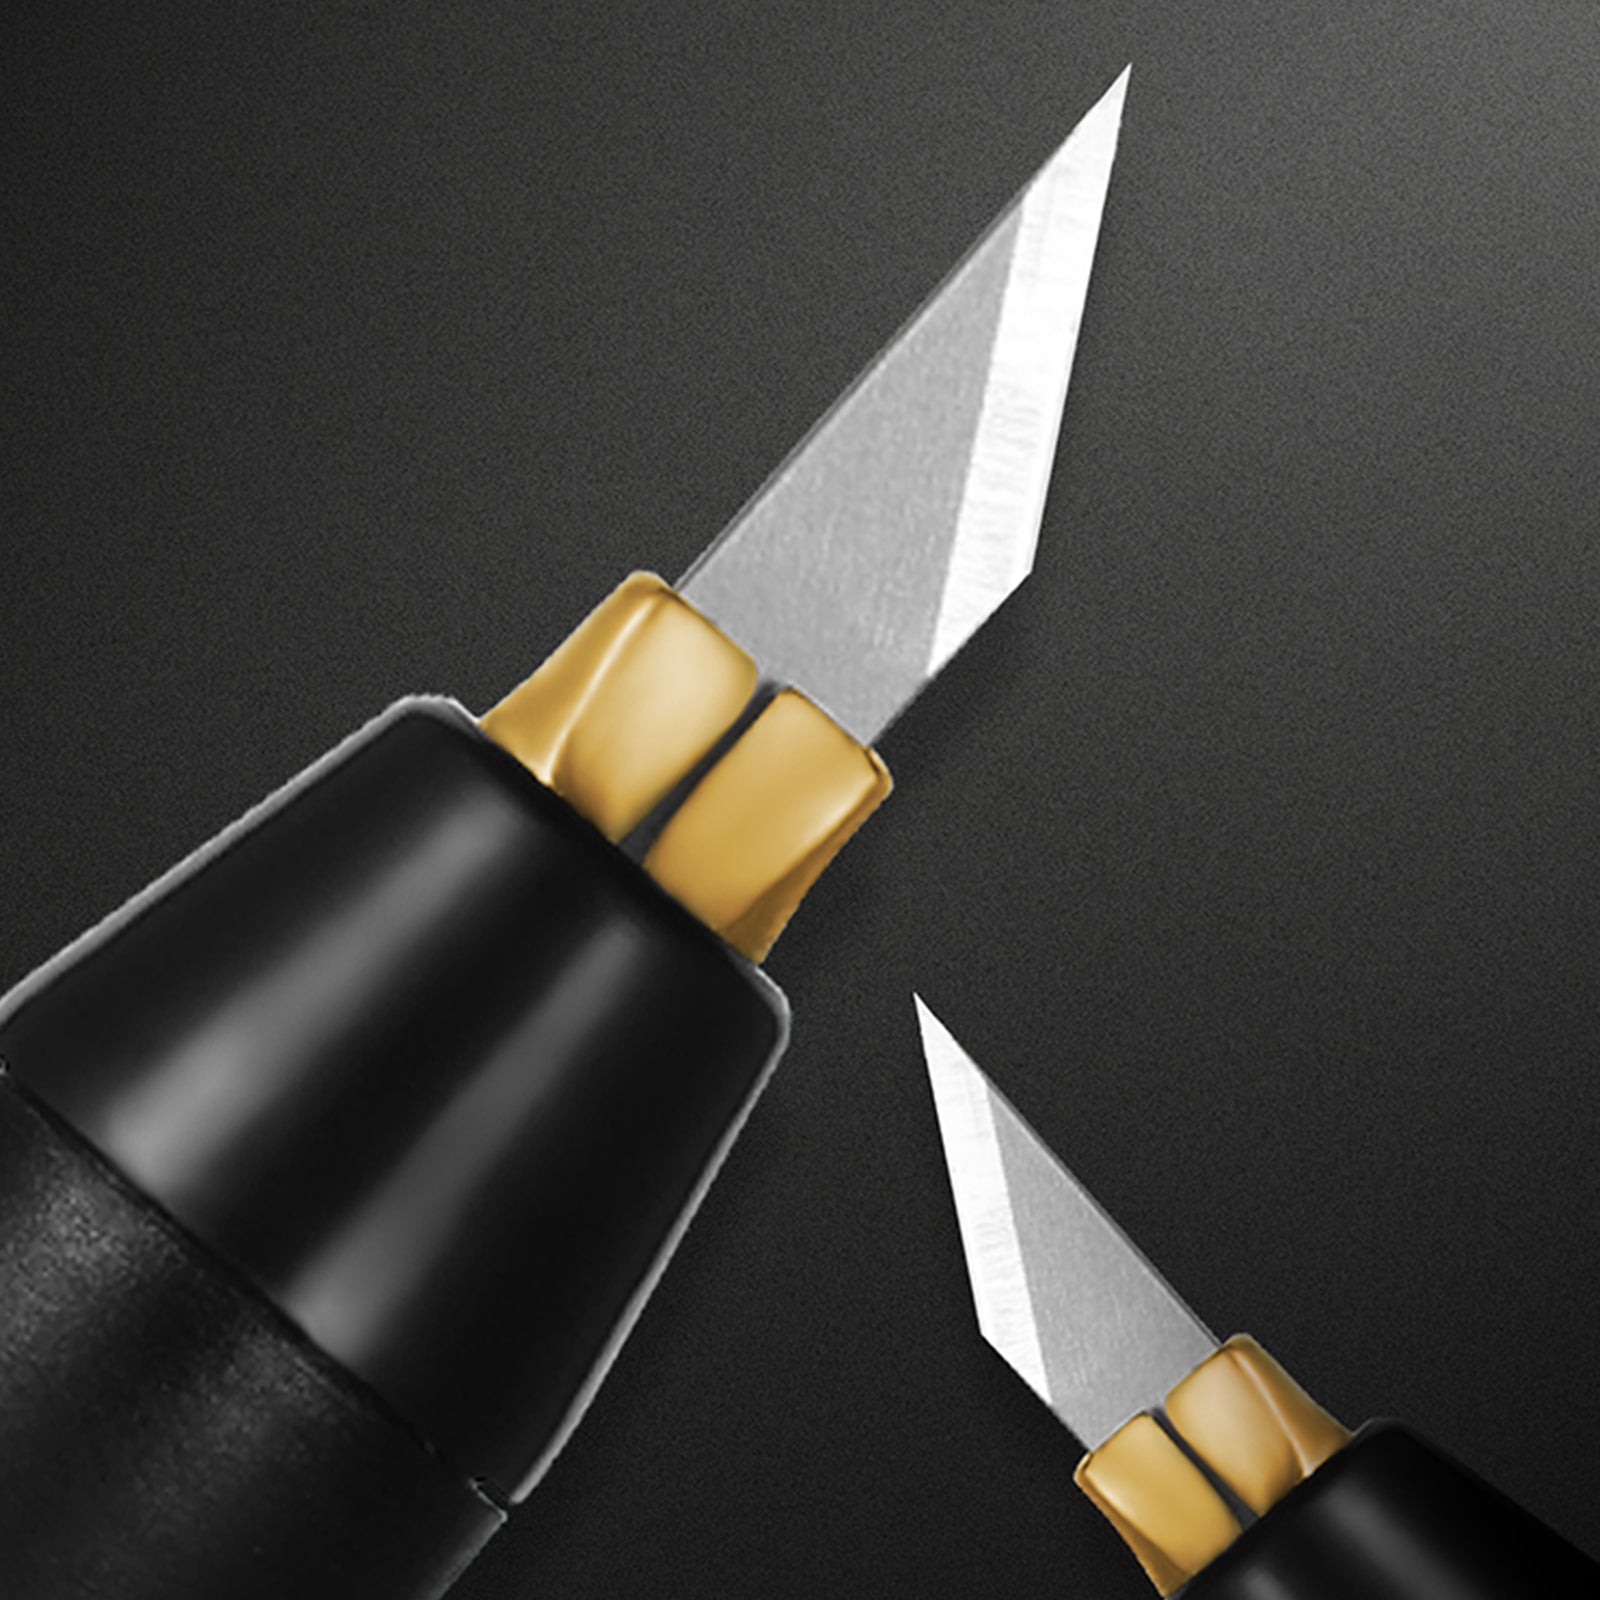 Dspiae PT-DK Precision Hobby Knife